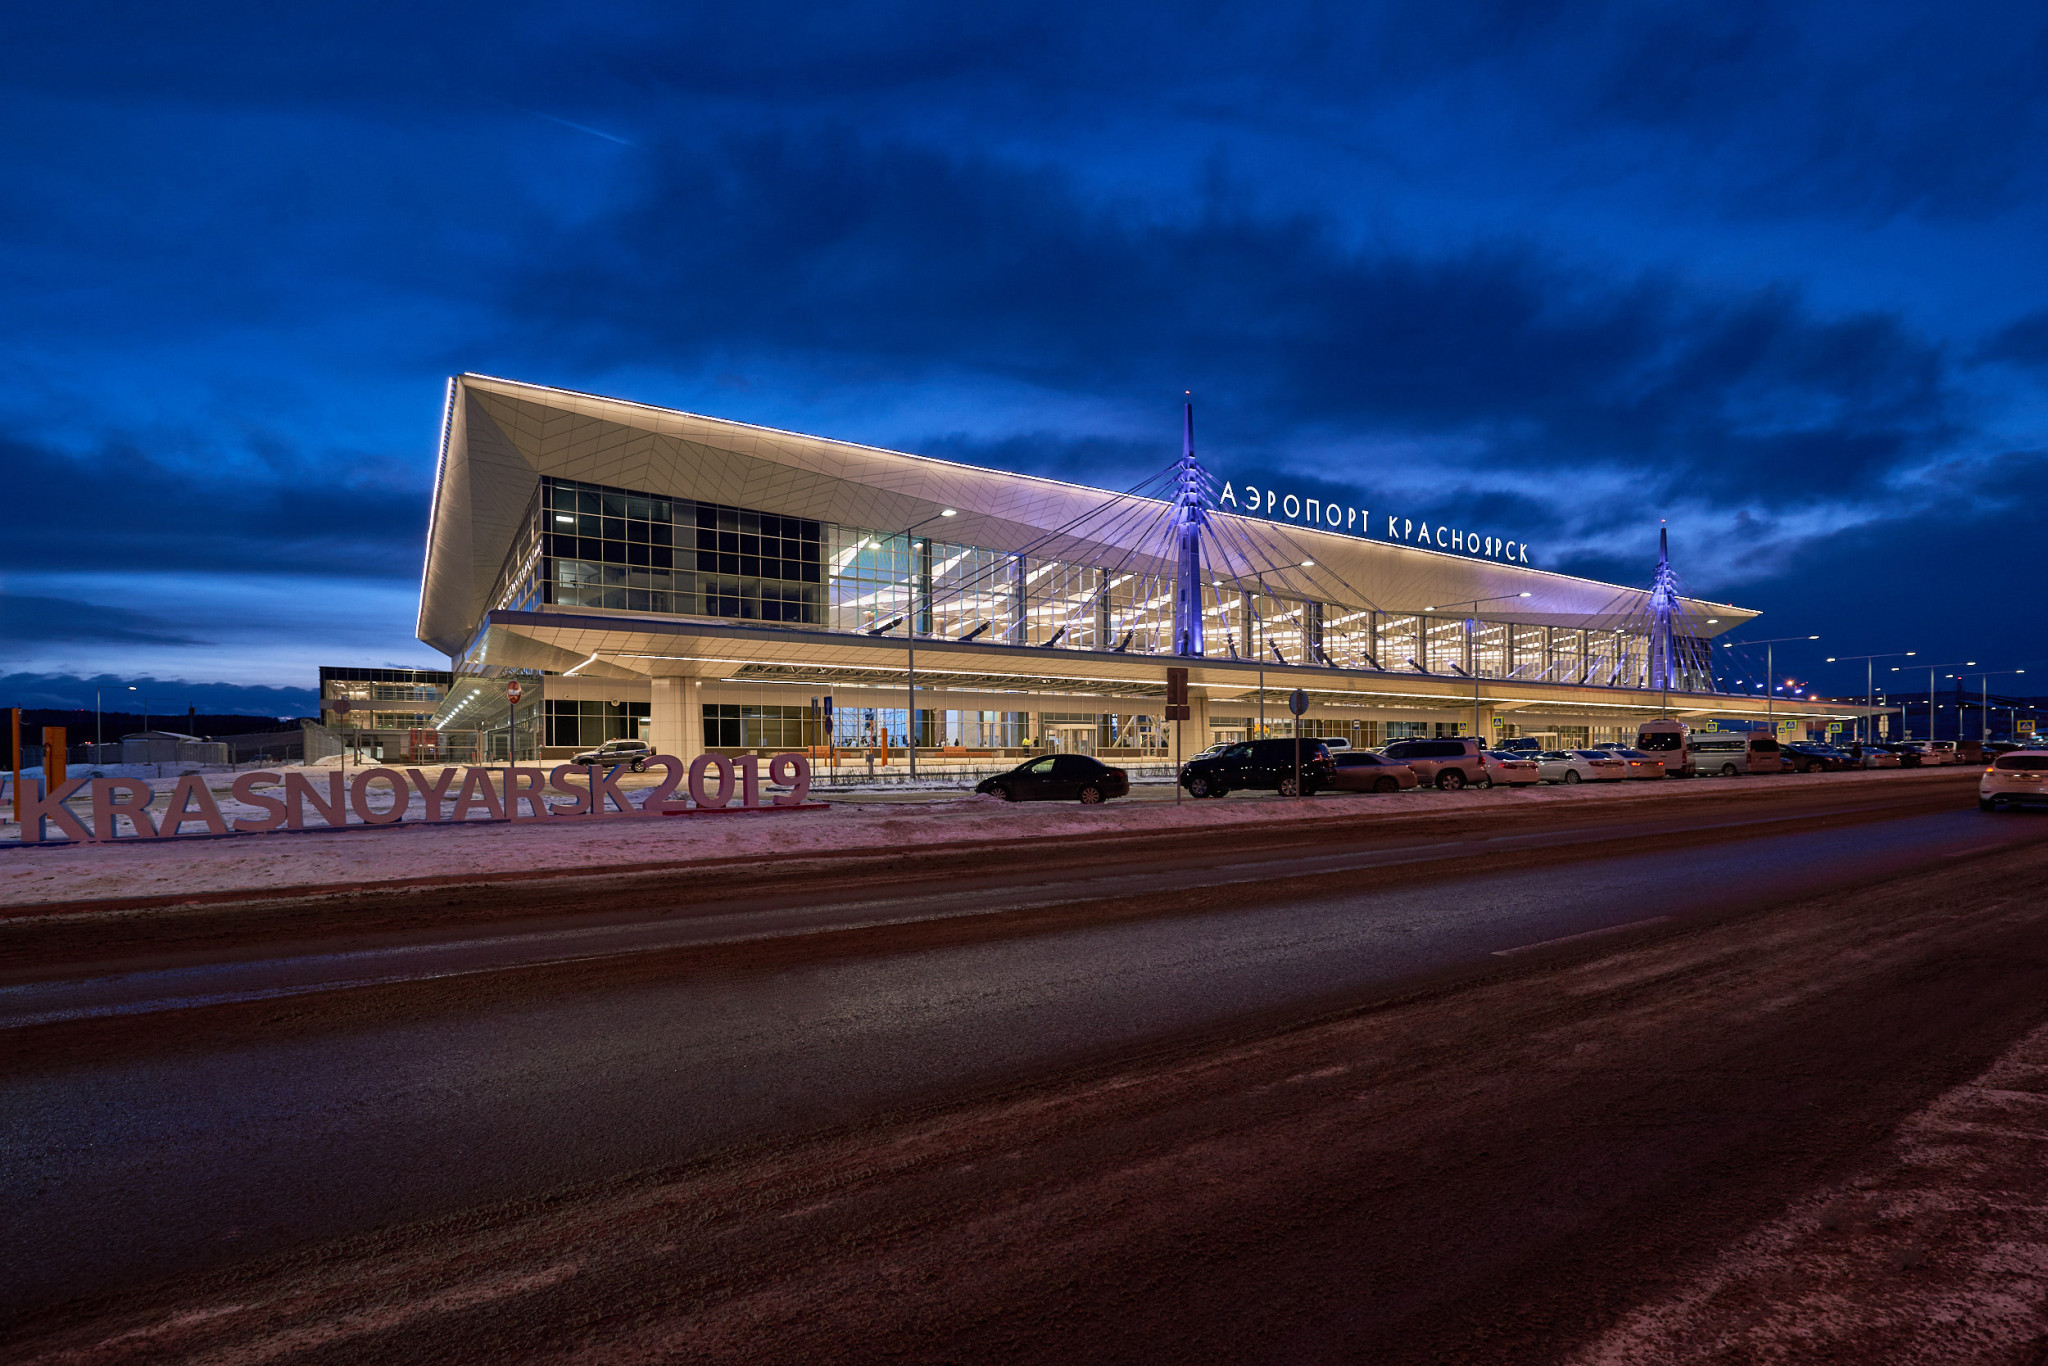 Krasnoyarsk airport has opened a new terminal especially for the 2019 Winter Universiade ©Krasnoyarsk 2019